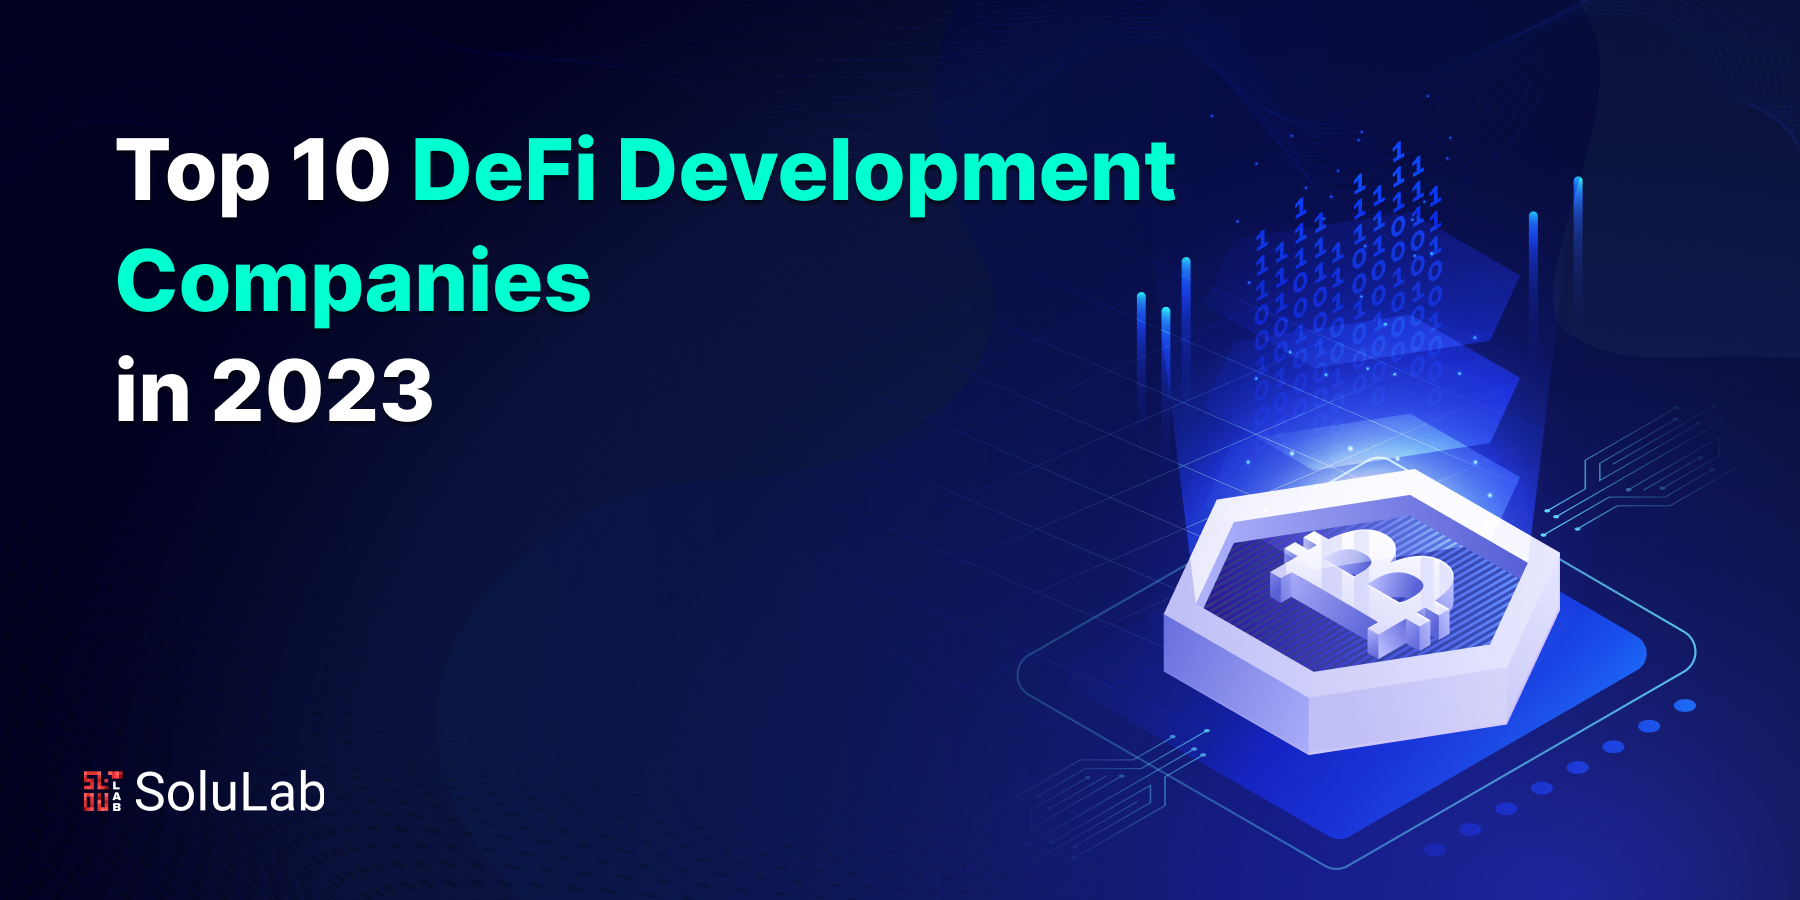 Top 10 DeFi Development Companies in 2023